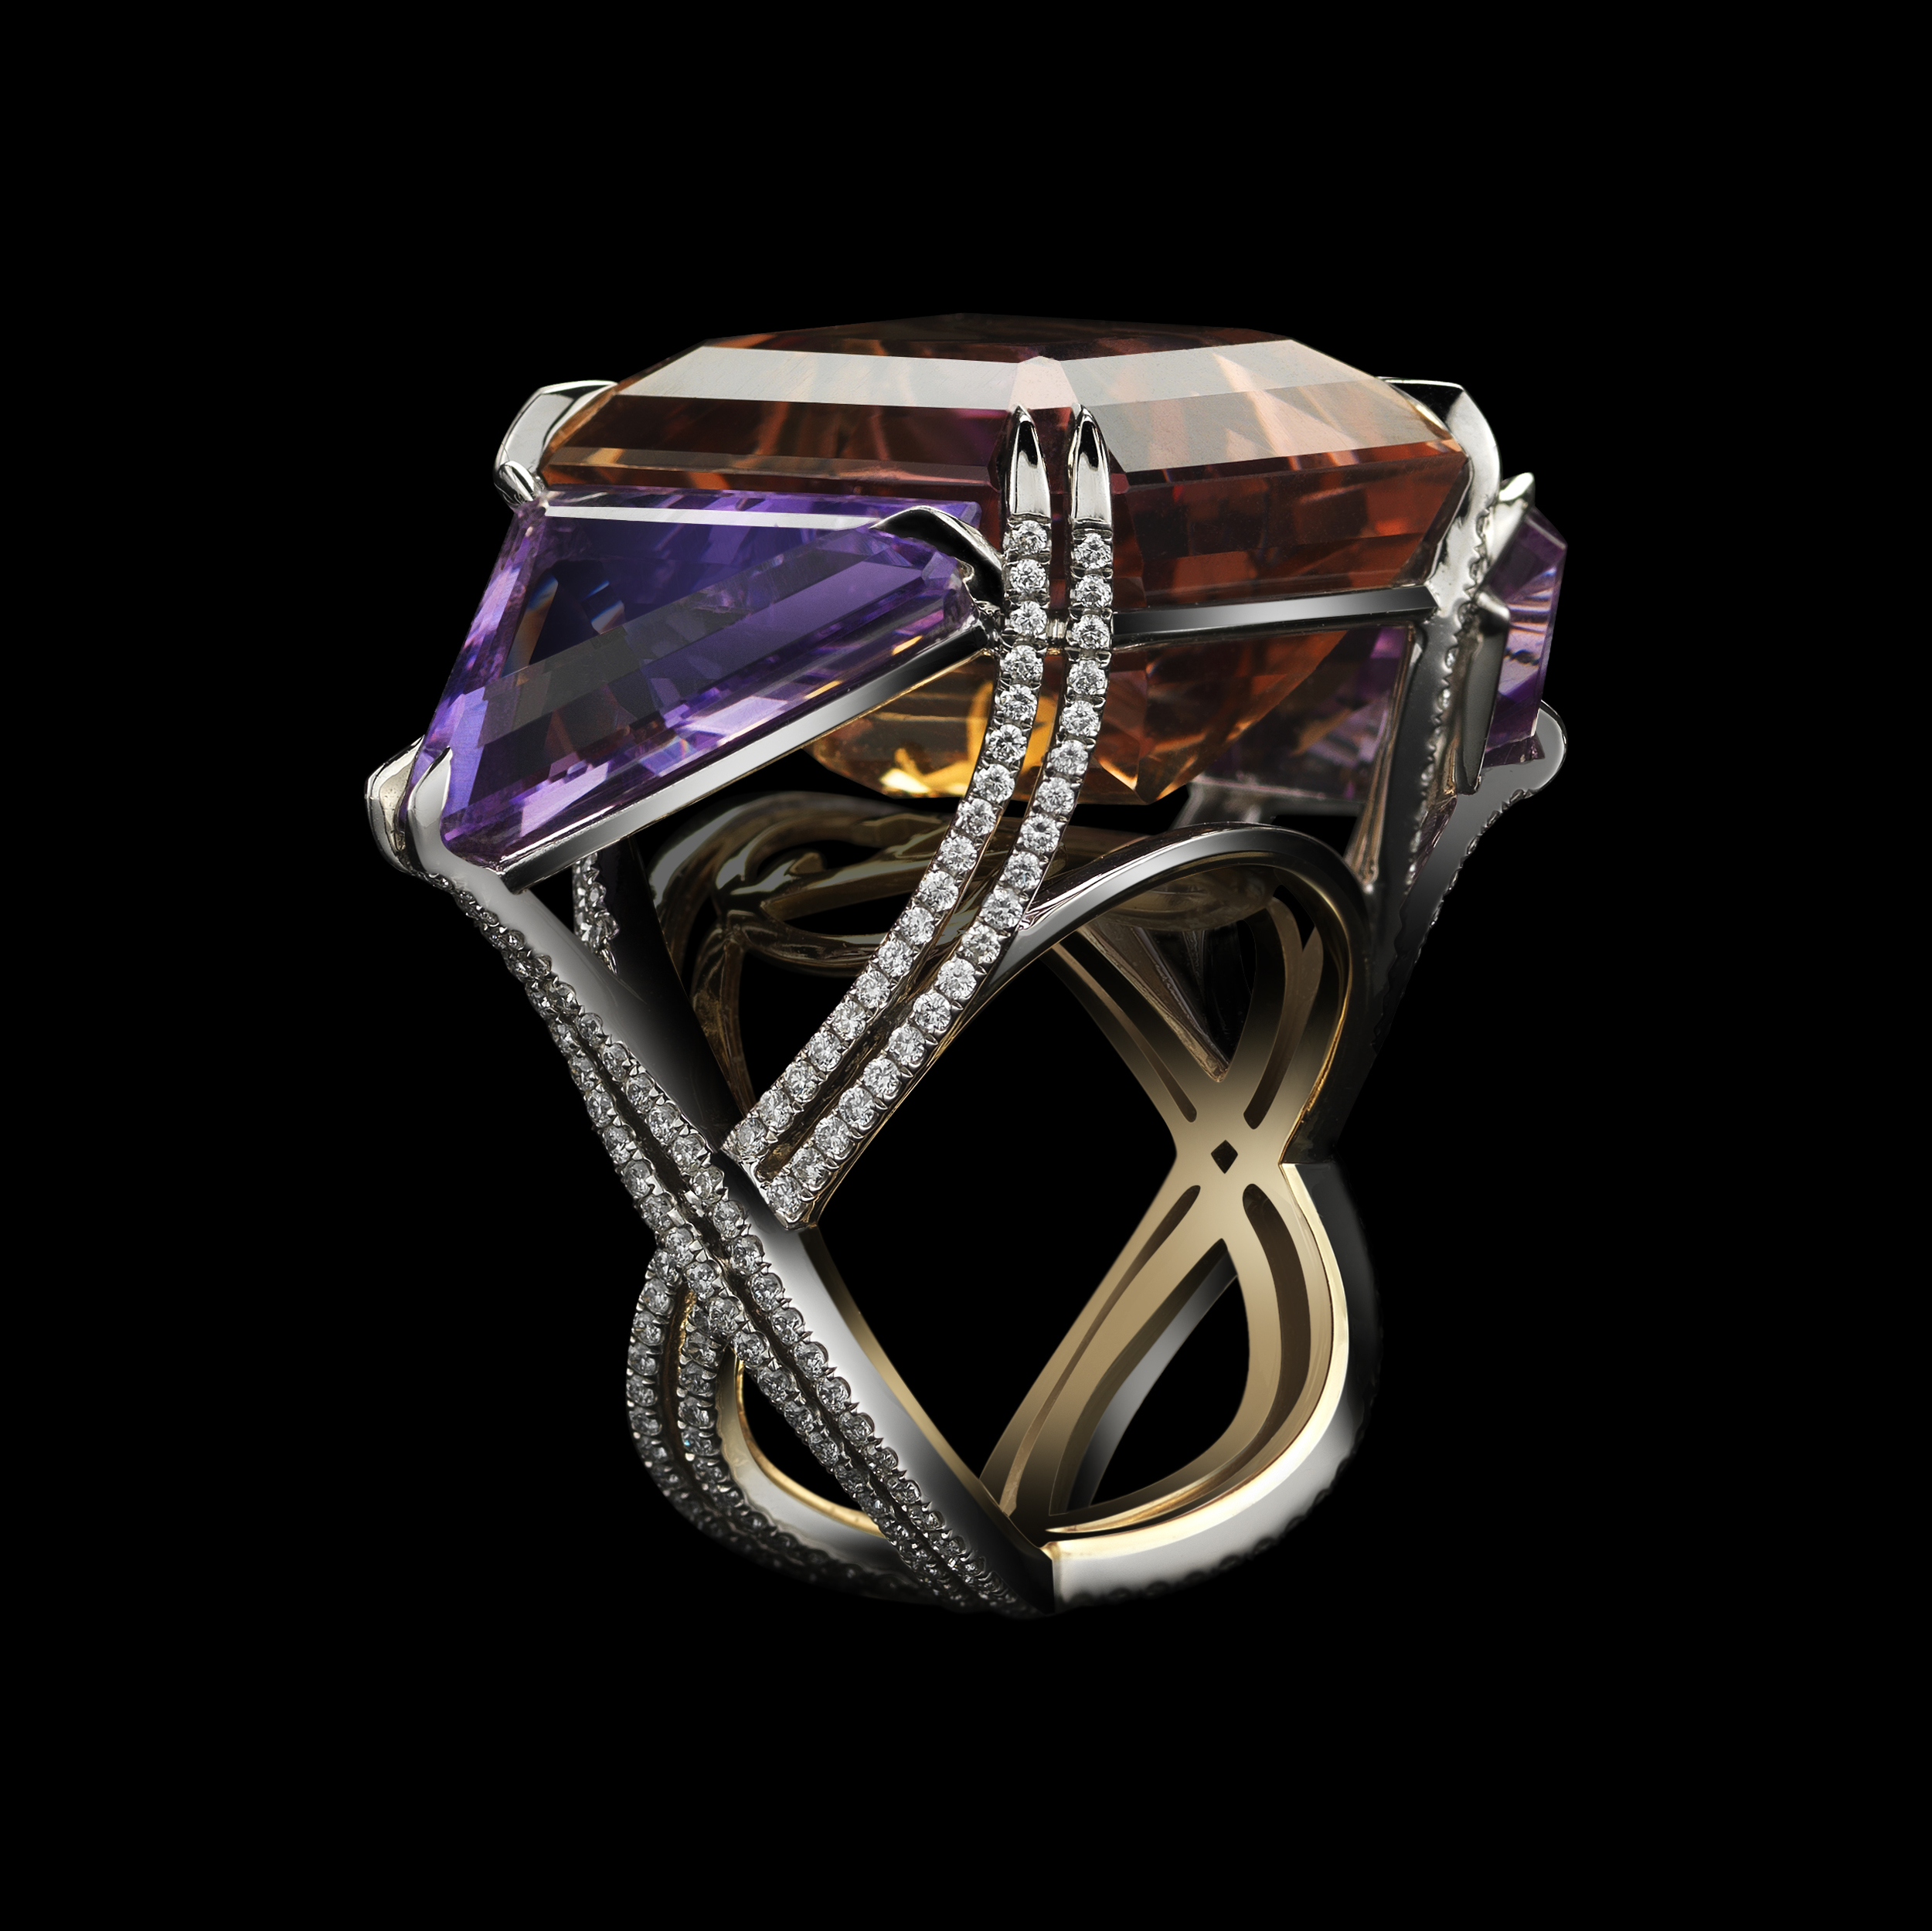 Asymmetrical Bicolor Ametrine & Diamond Three Stone Ring AMRG4009-01_B HI RES BLK BG.jpeg